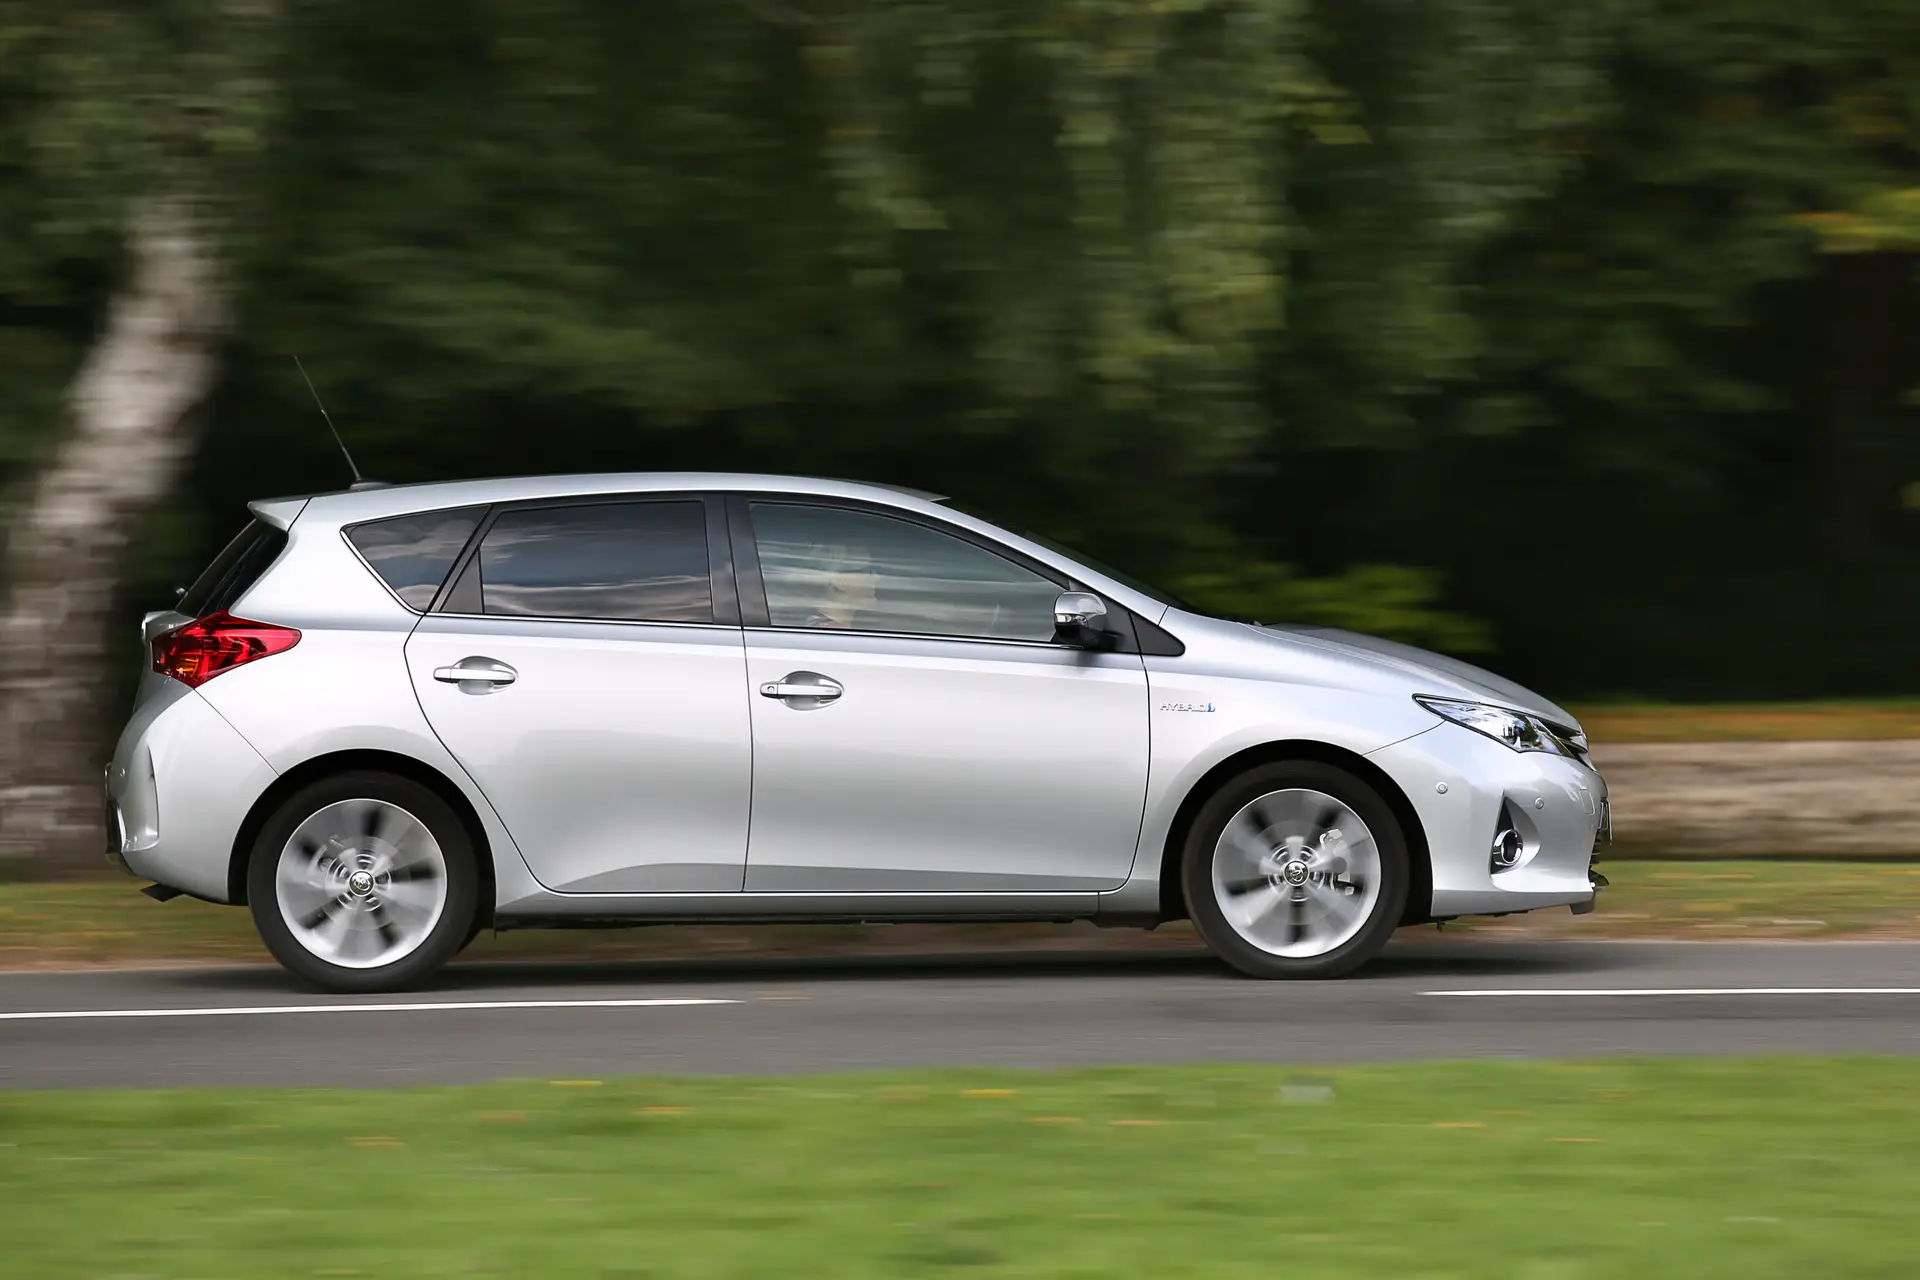 Toyota Auris (2015 - 2019) used car review, Car review